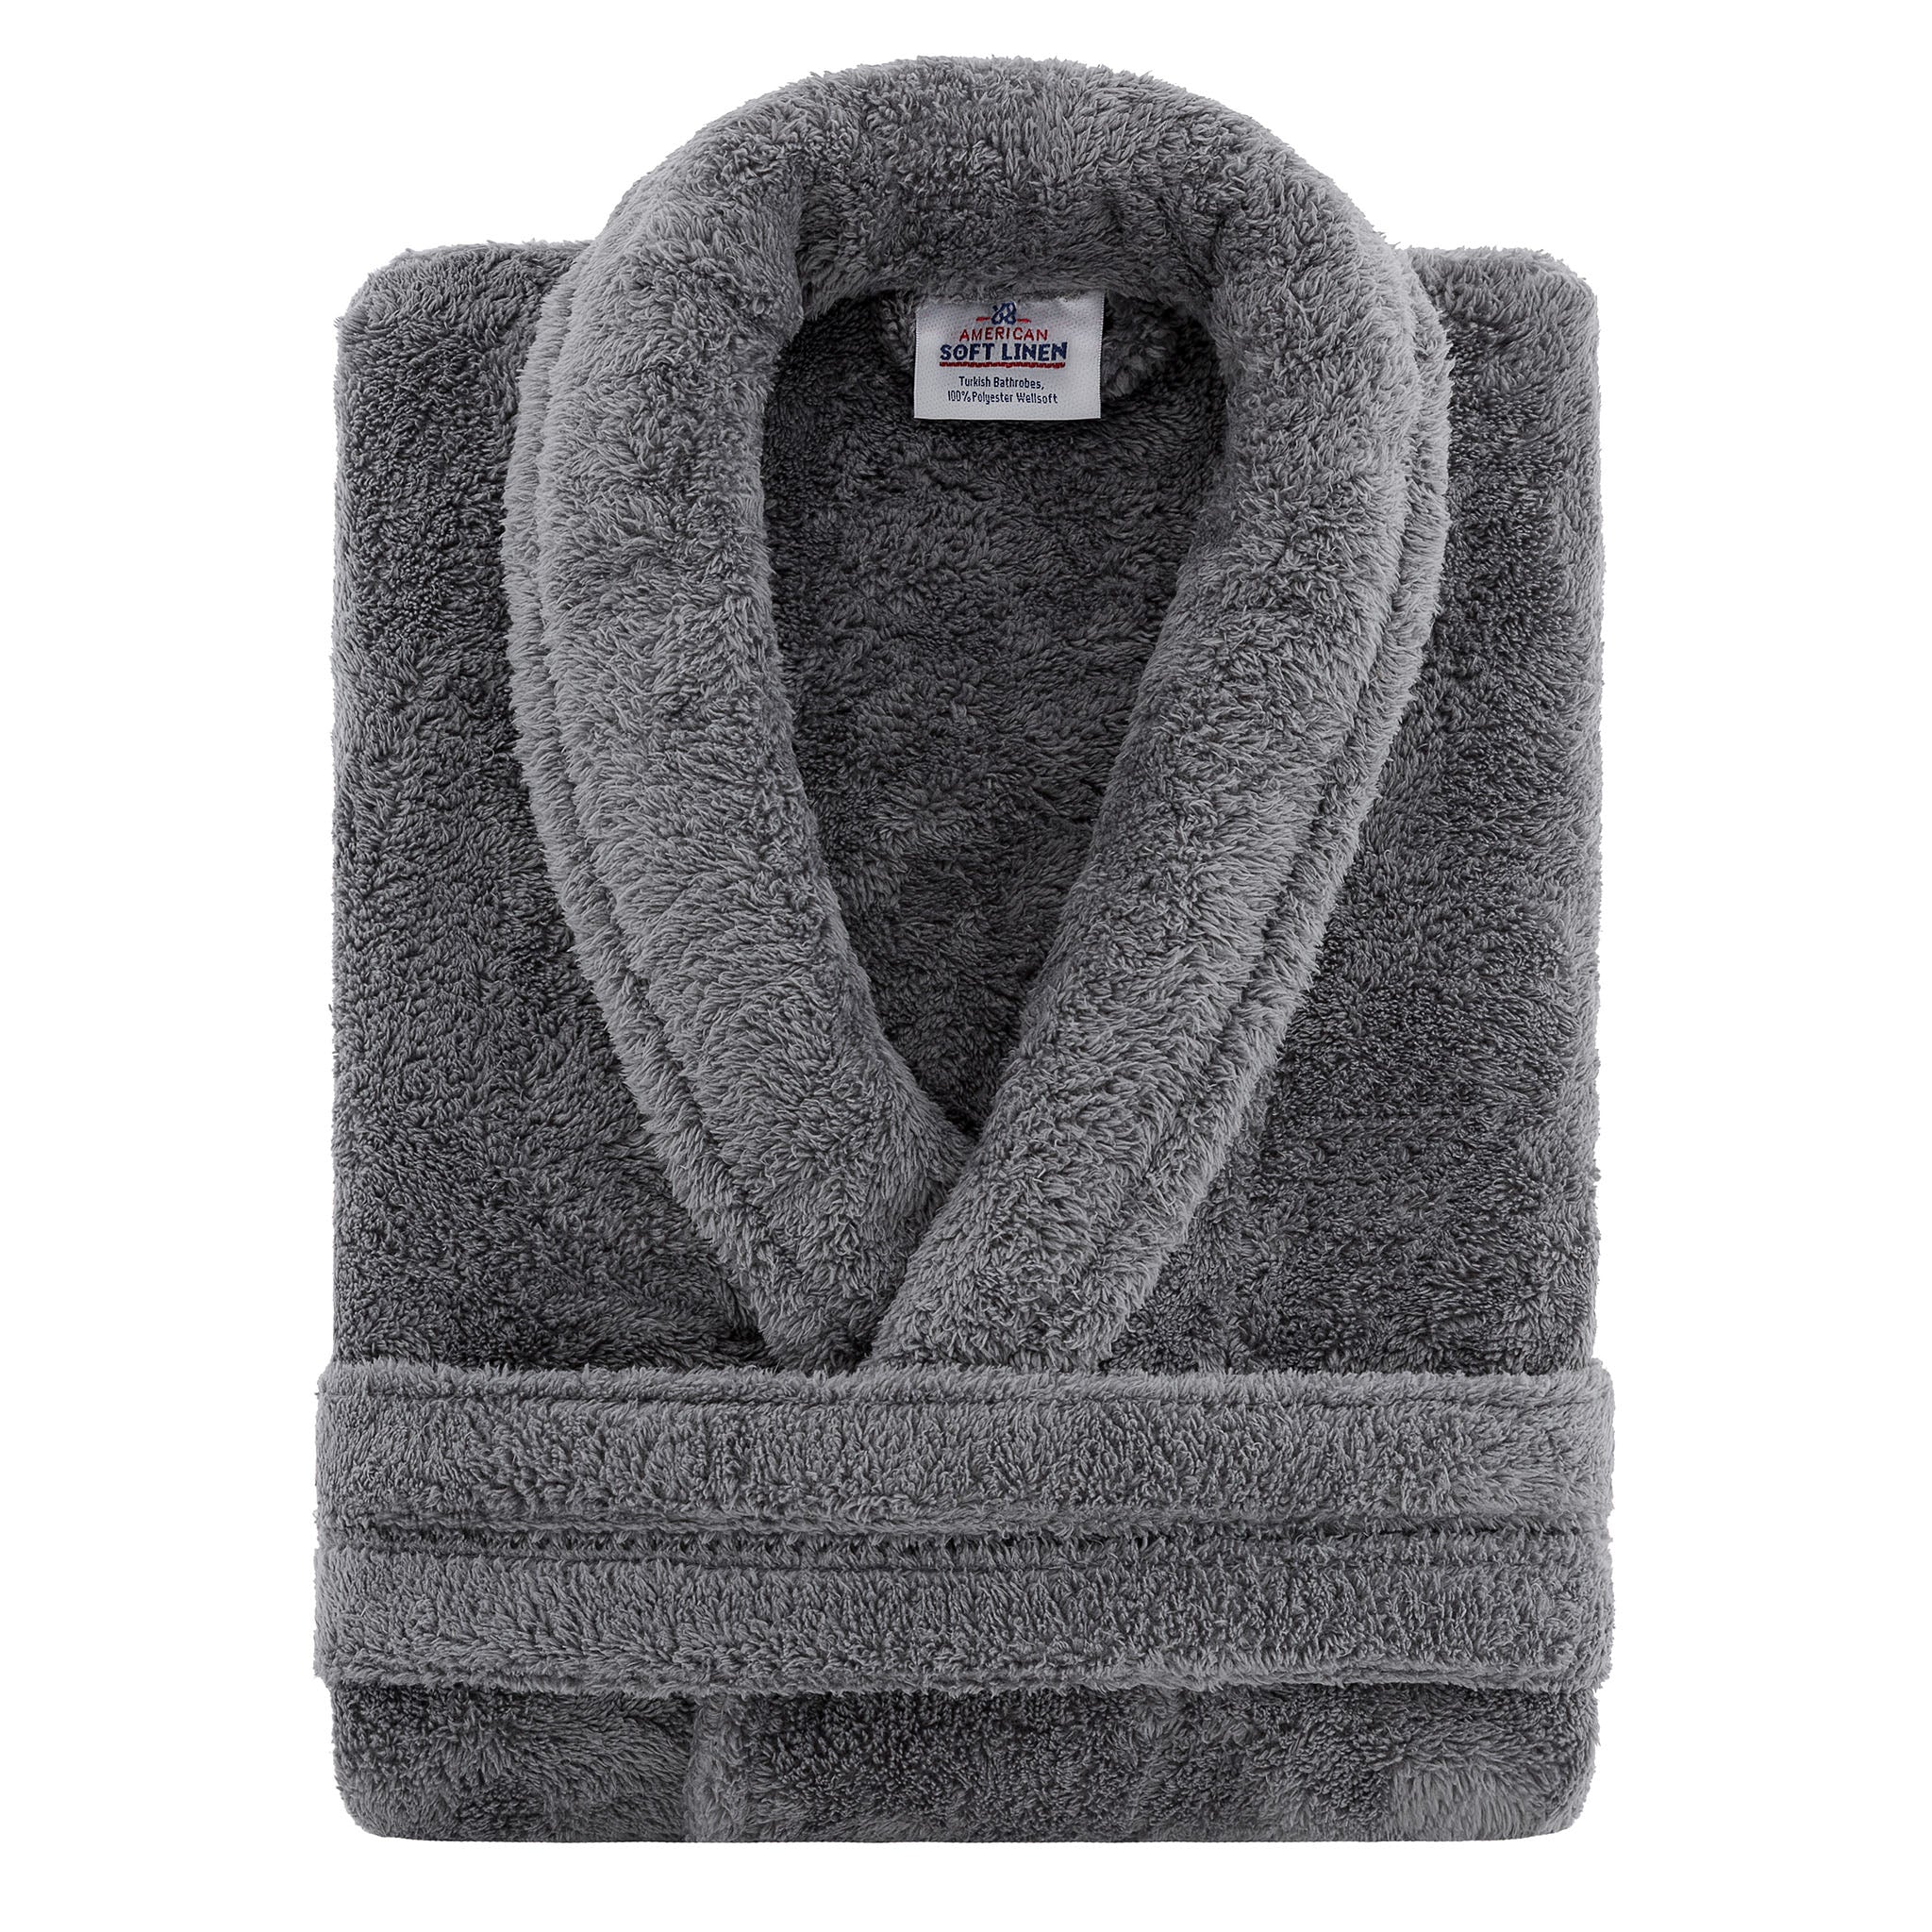 American Soft Linen Super Soft, Absorbent and Fluffy, Unisex Fleece Bathrobe M-L-gray-3